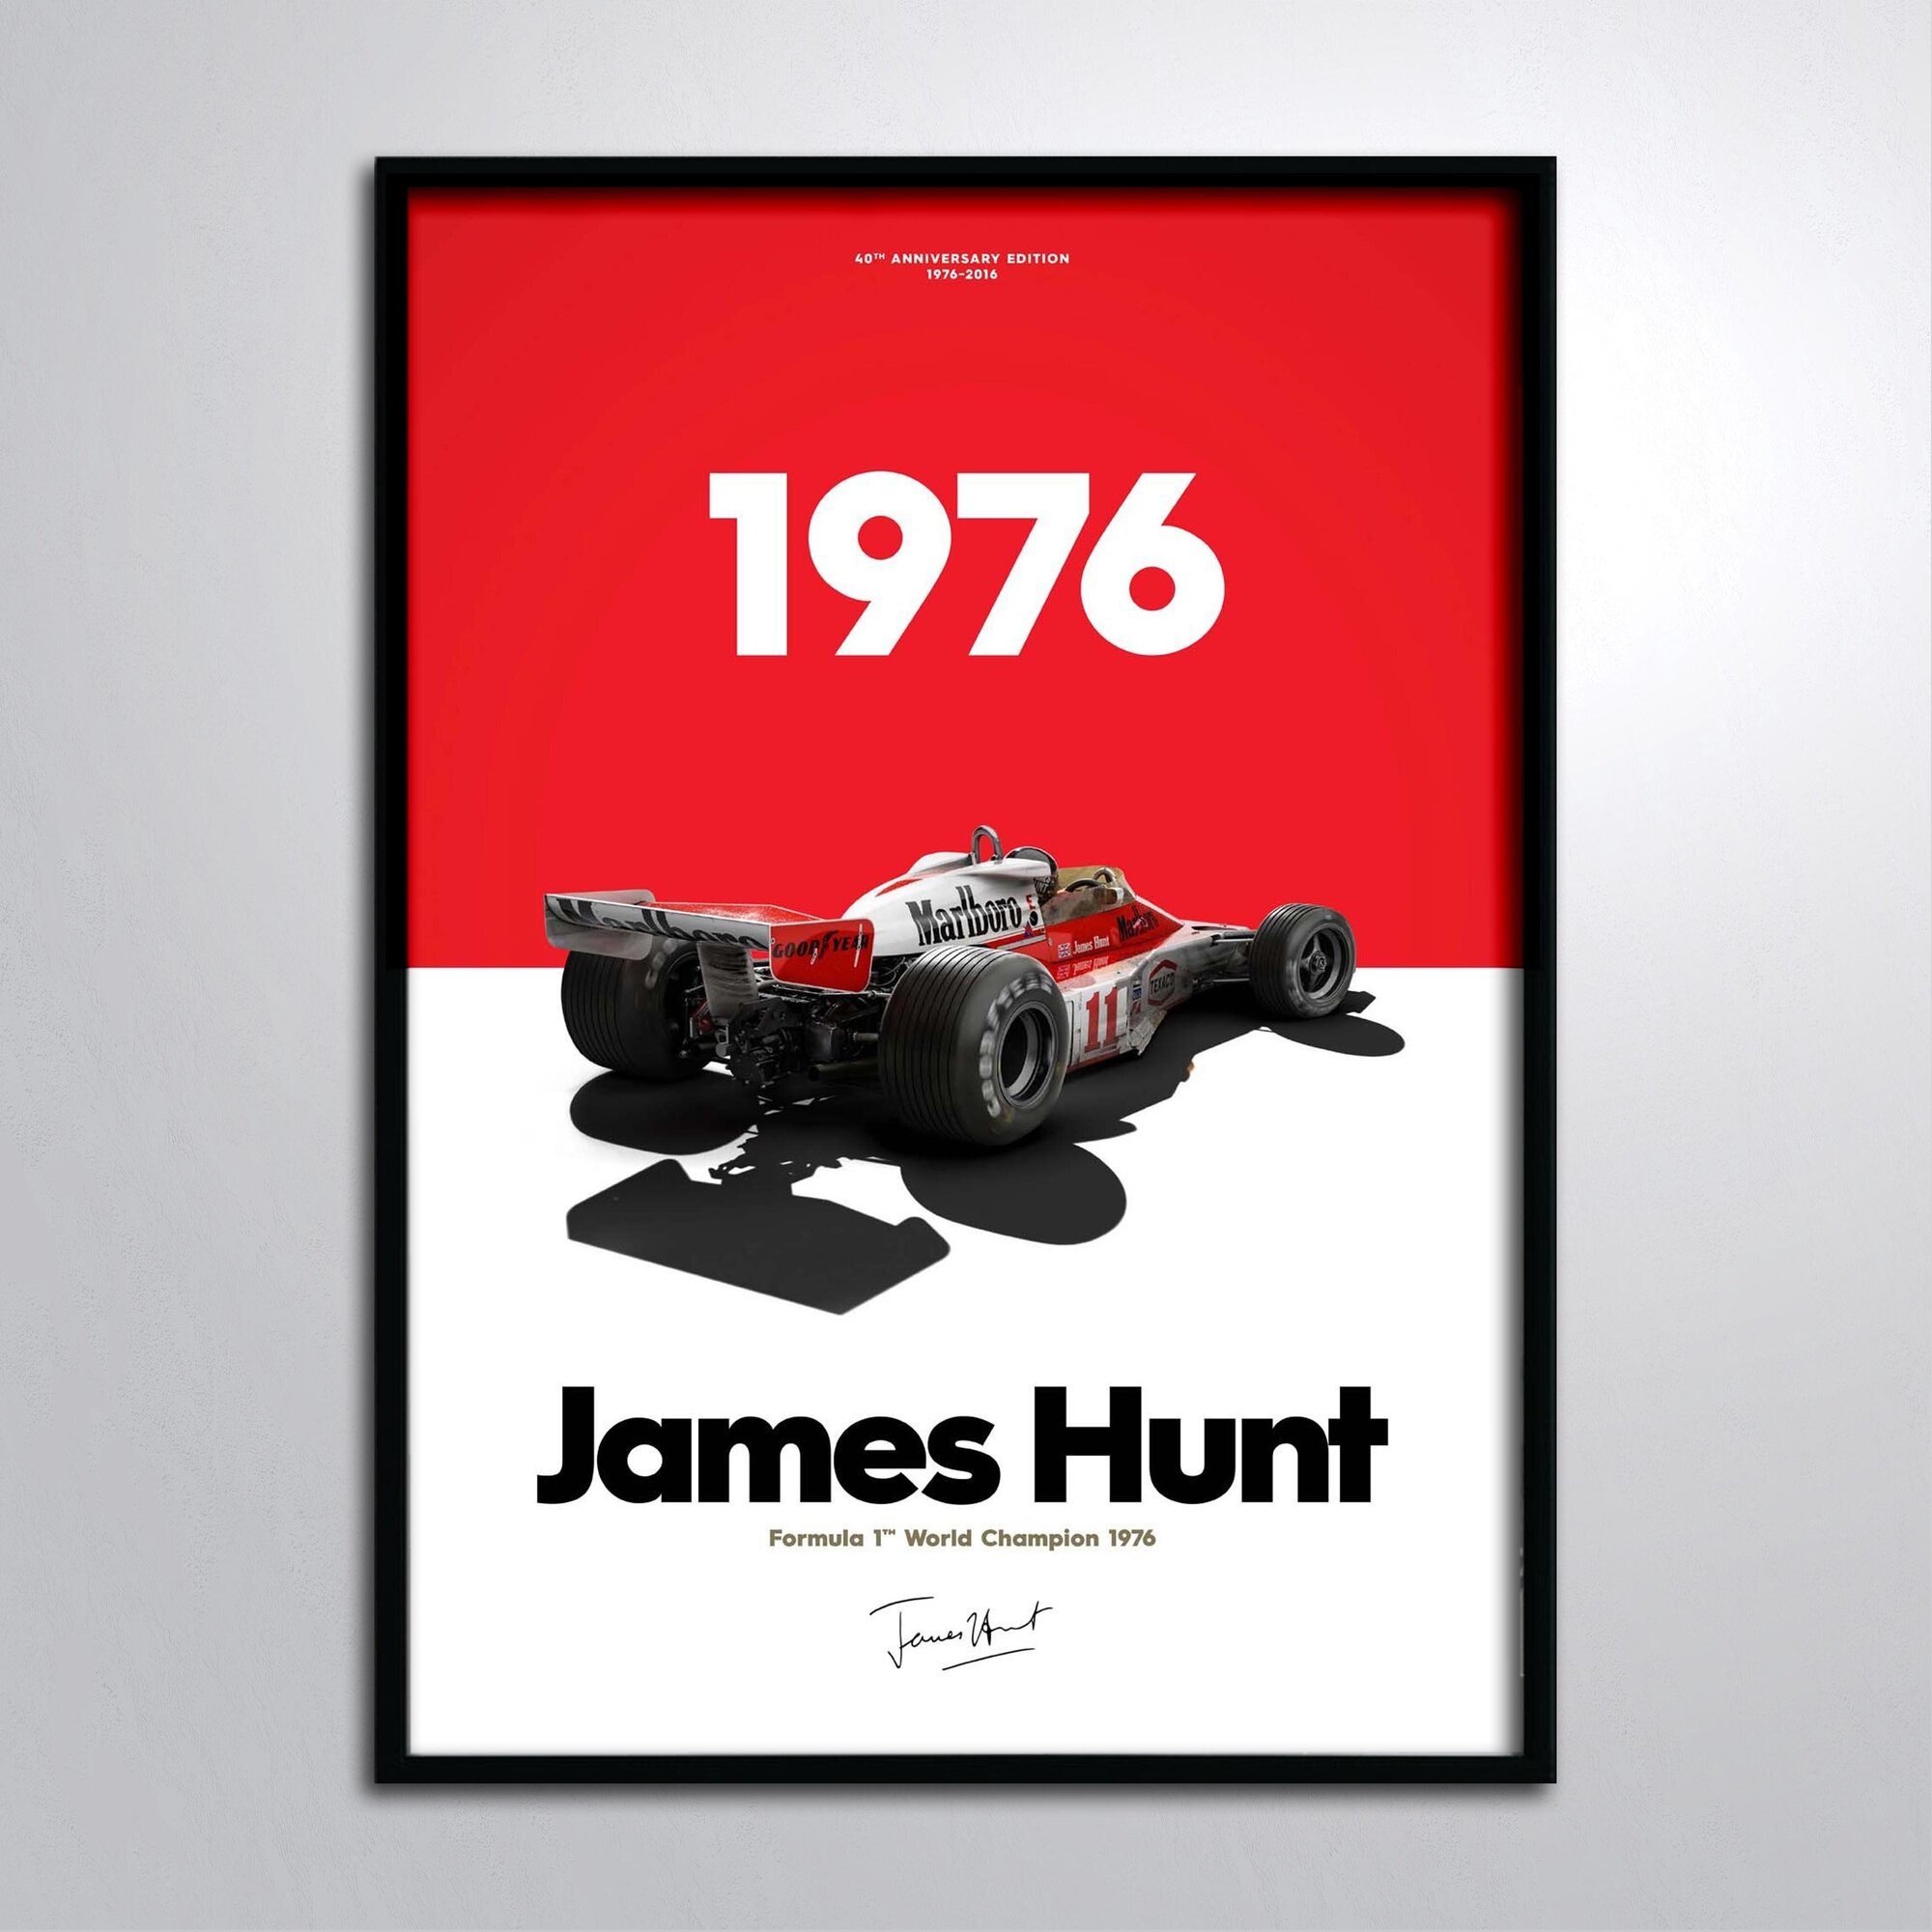 Постер в раме/Болид Формула 1 f1 James Hunt Formula 1 World Champion 1976 Джеимс Хант